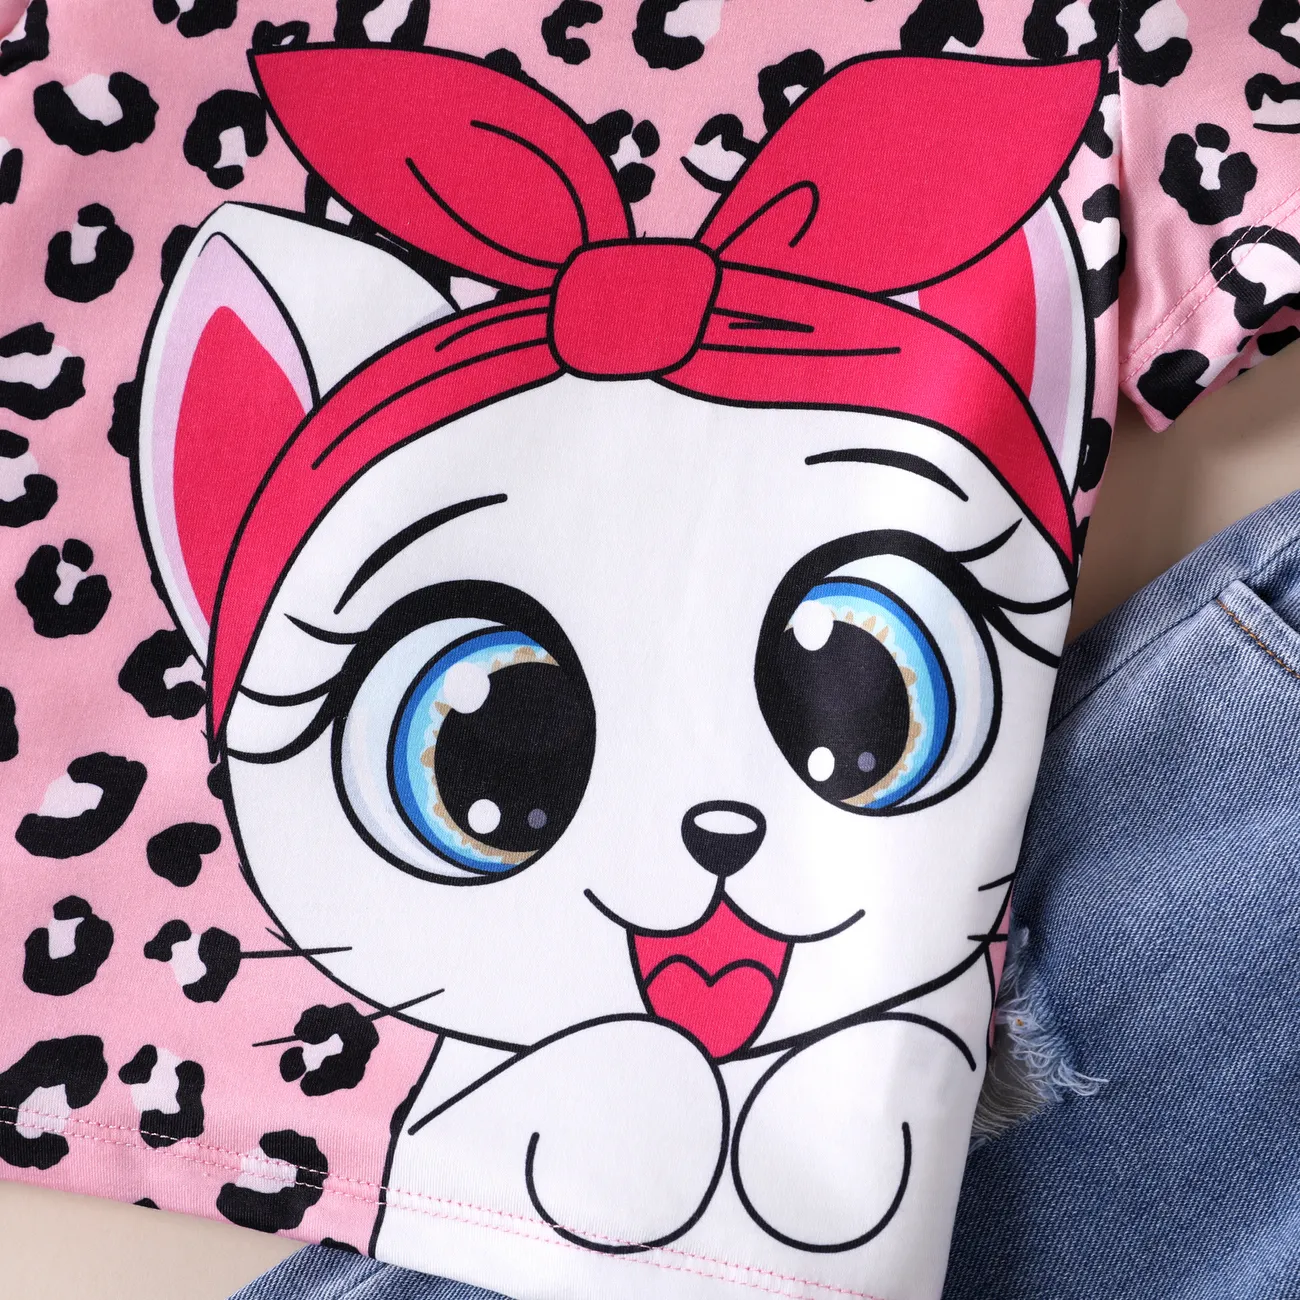 Toddler Girl 2pcs Leopard Cat Print Tee and Denim Jeans Set Pink big image 1